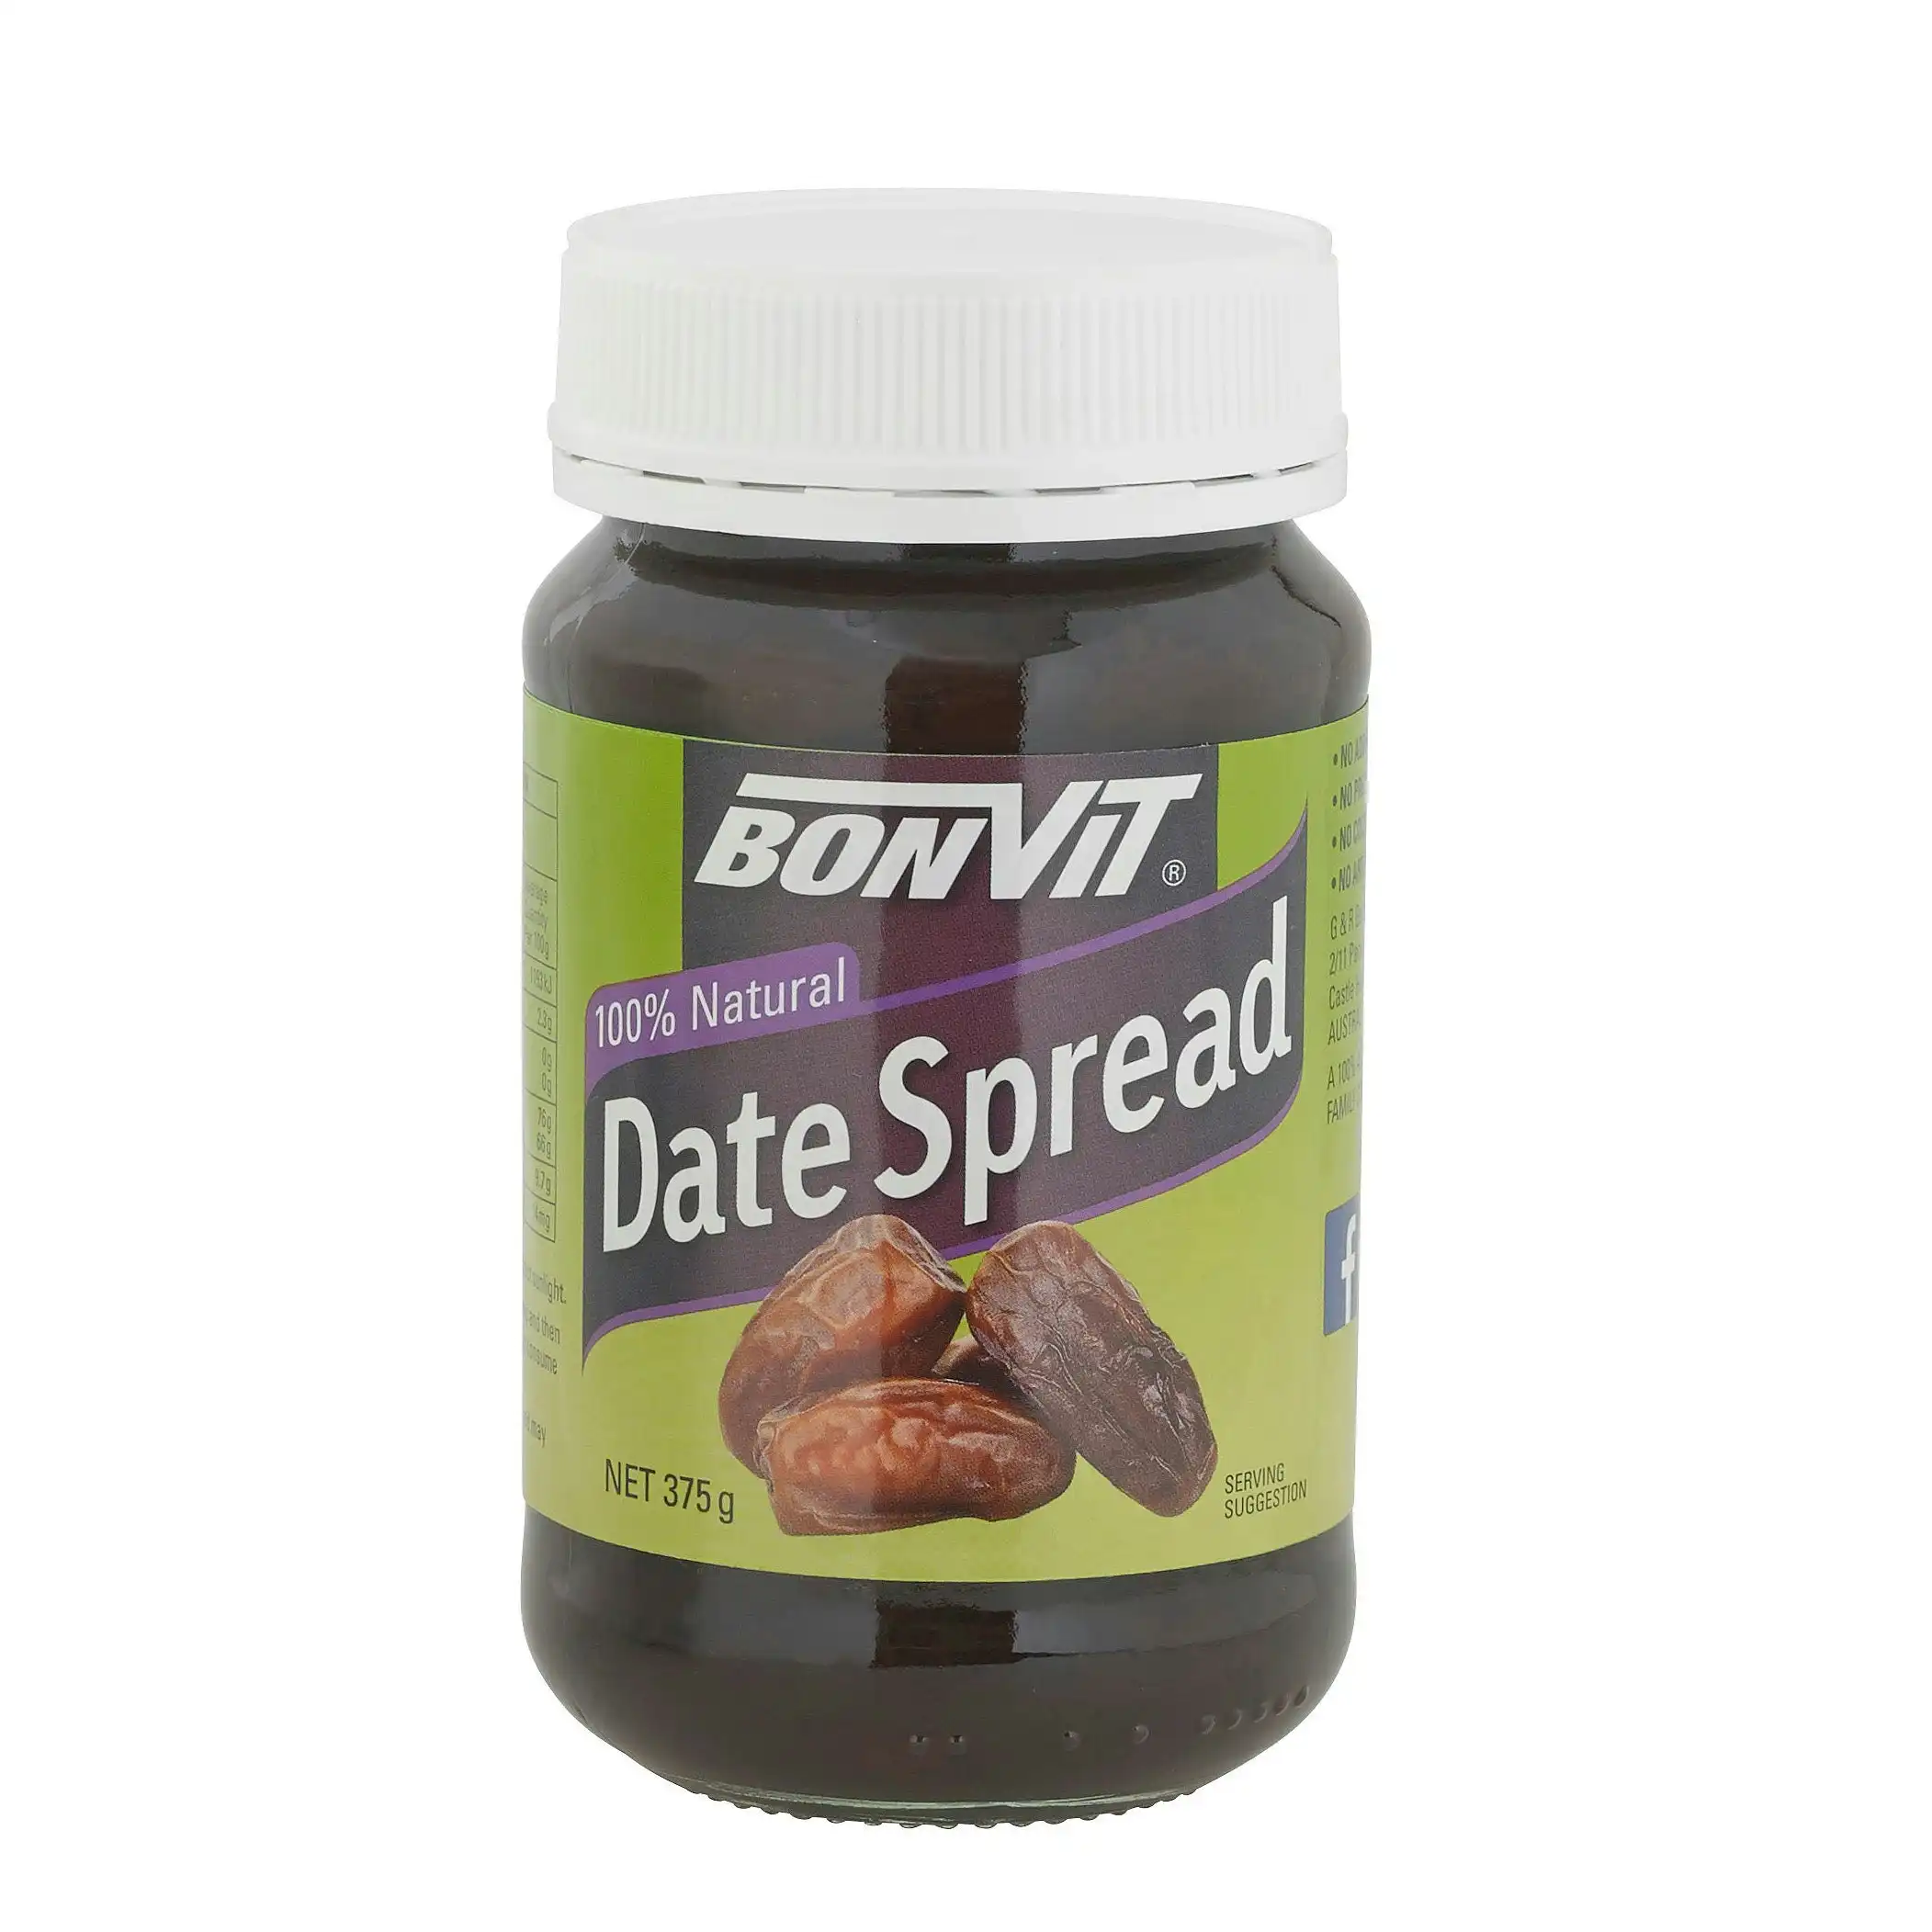 Bonvit Spread Date 375g